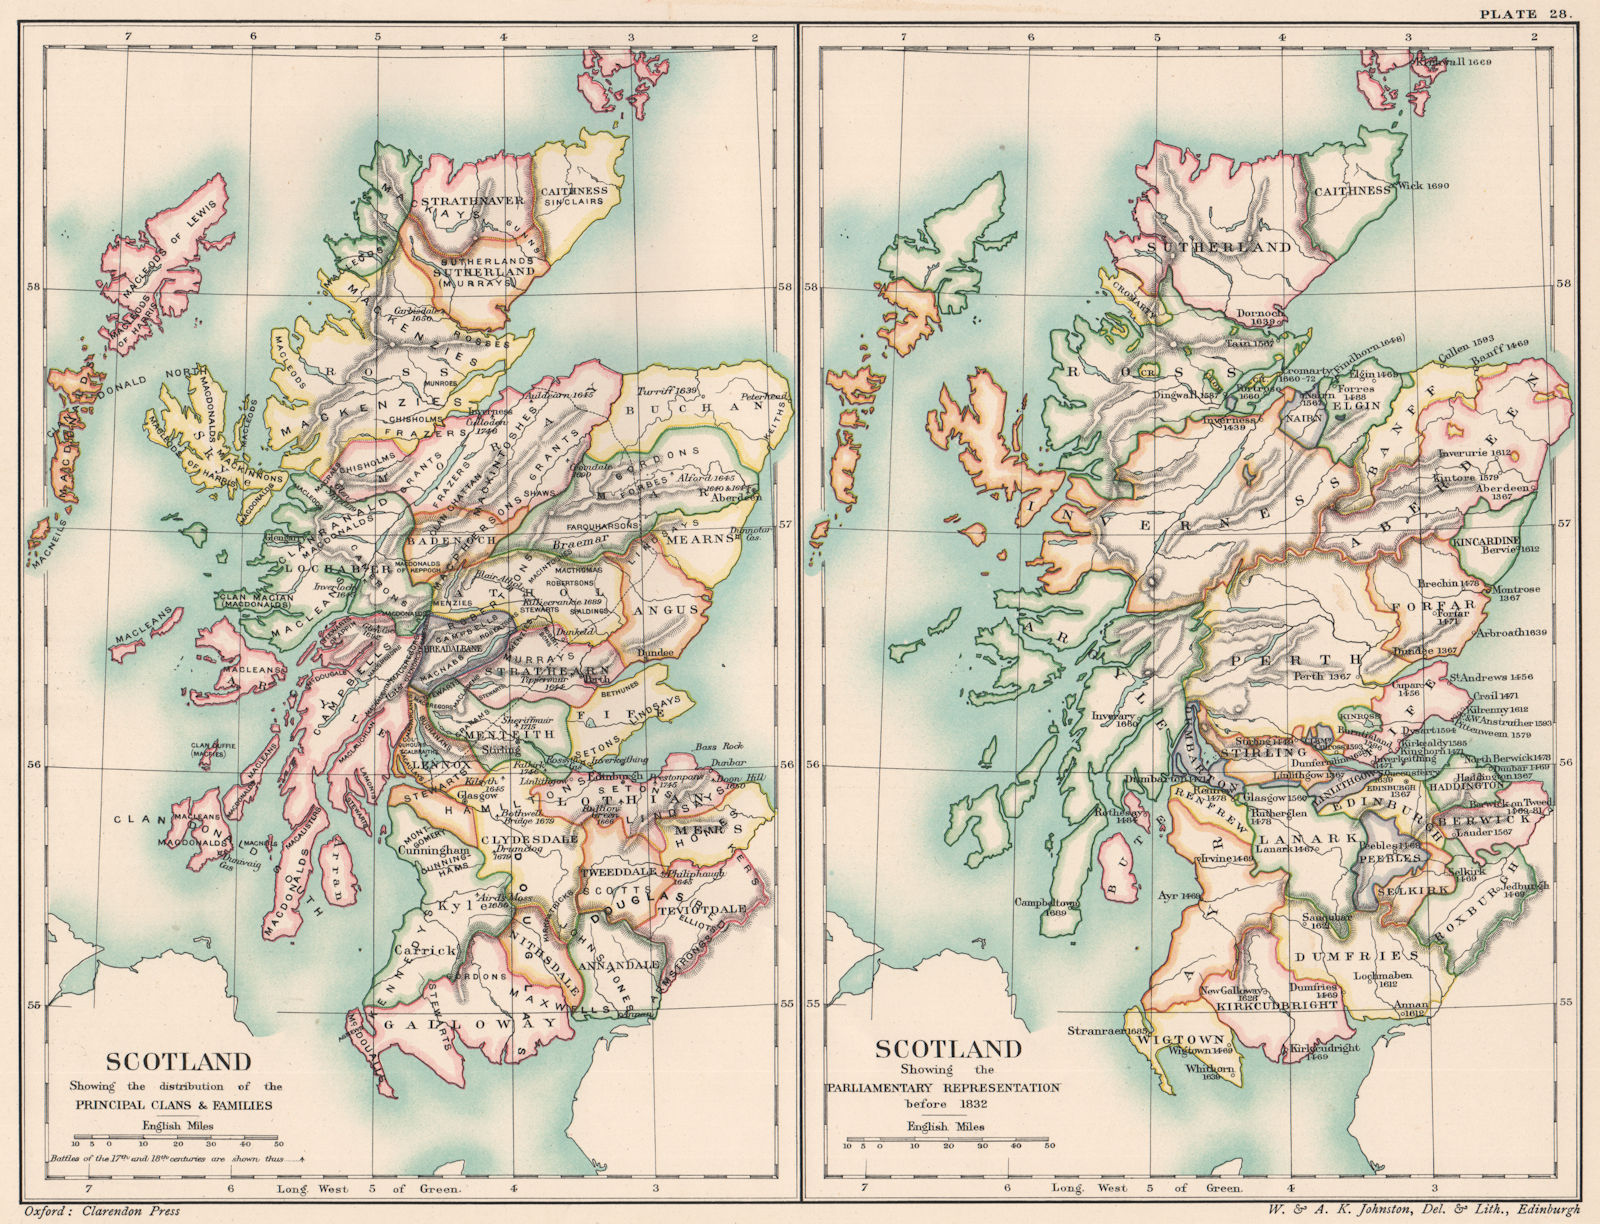 SCOTLAND. Scottish Clans. Parliamentary representation before 1832 1902 map